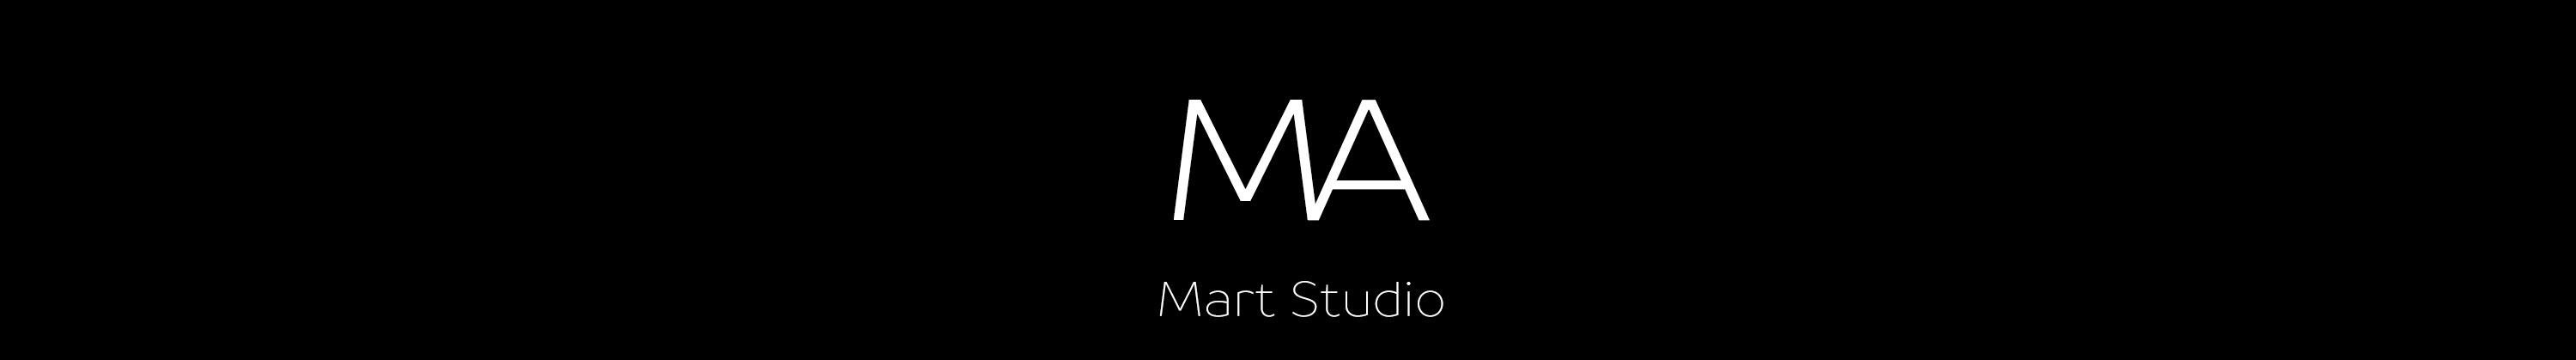 MART Studio's profile banner